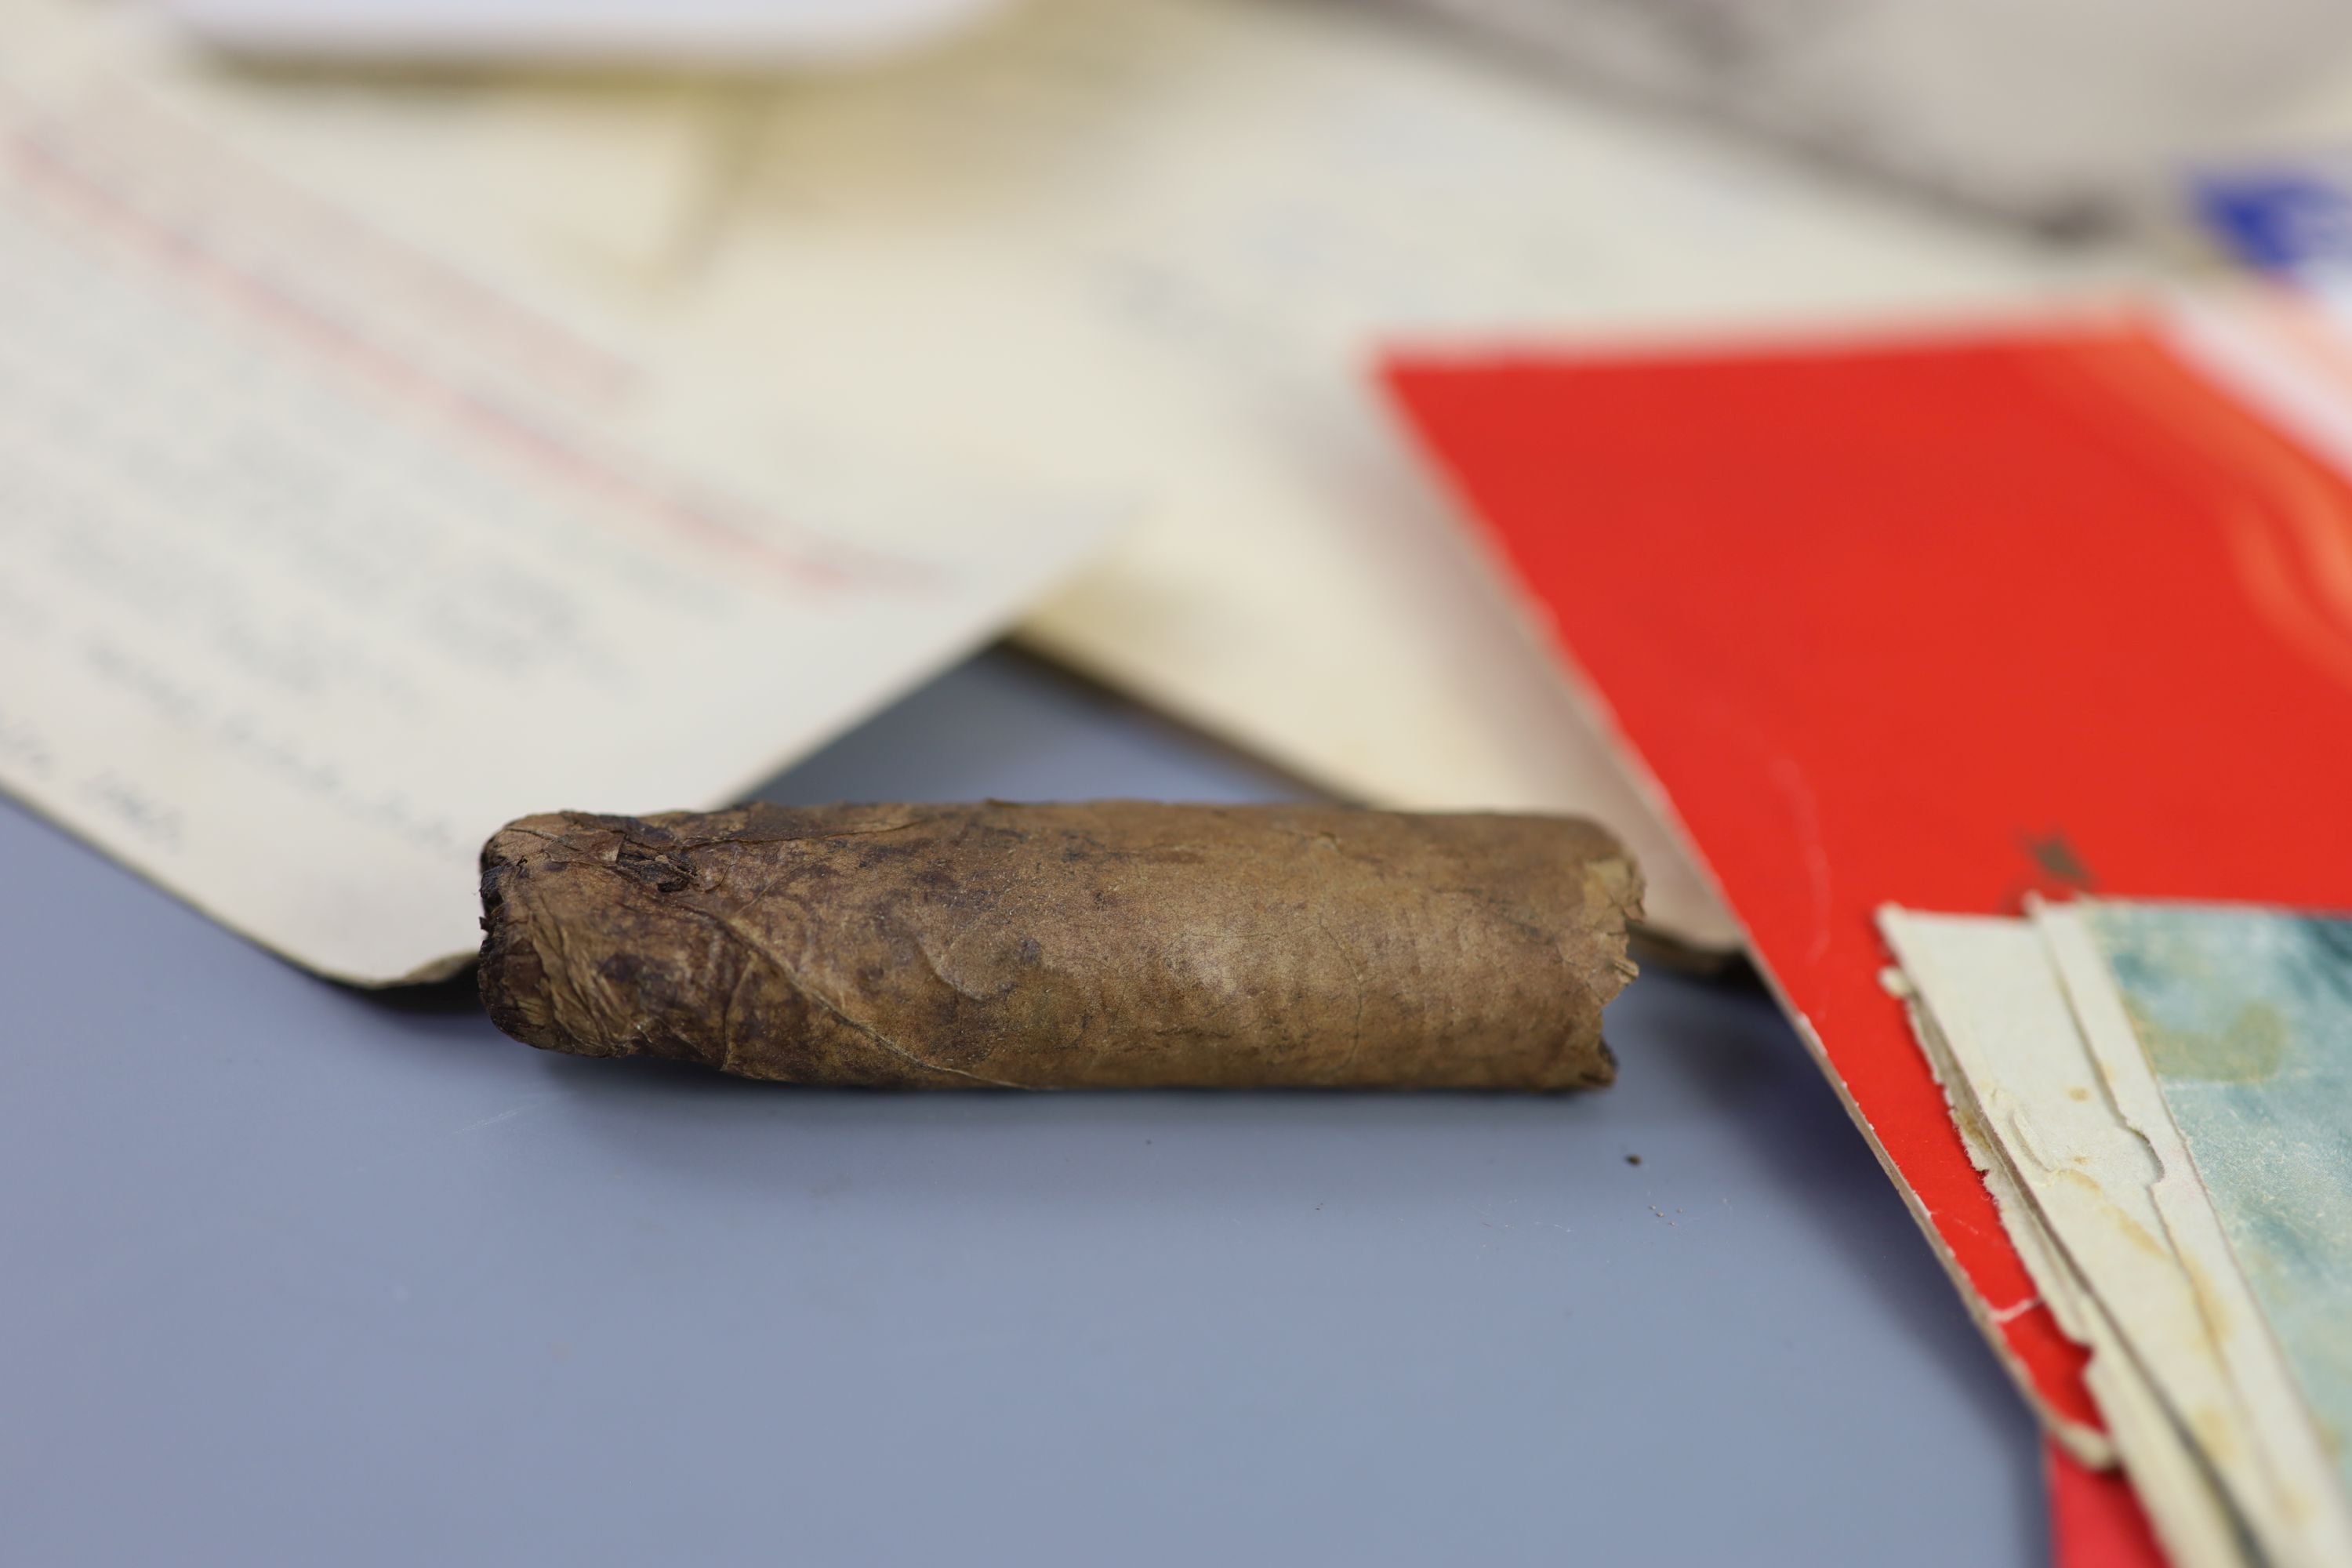 Sir Winston Churchill interest: a 3 inch long half smoked cigar